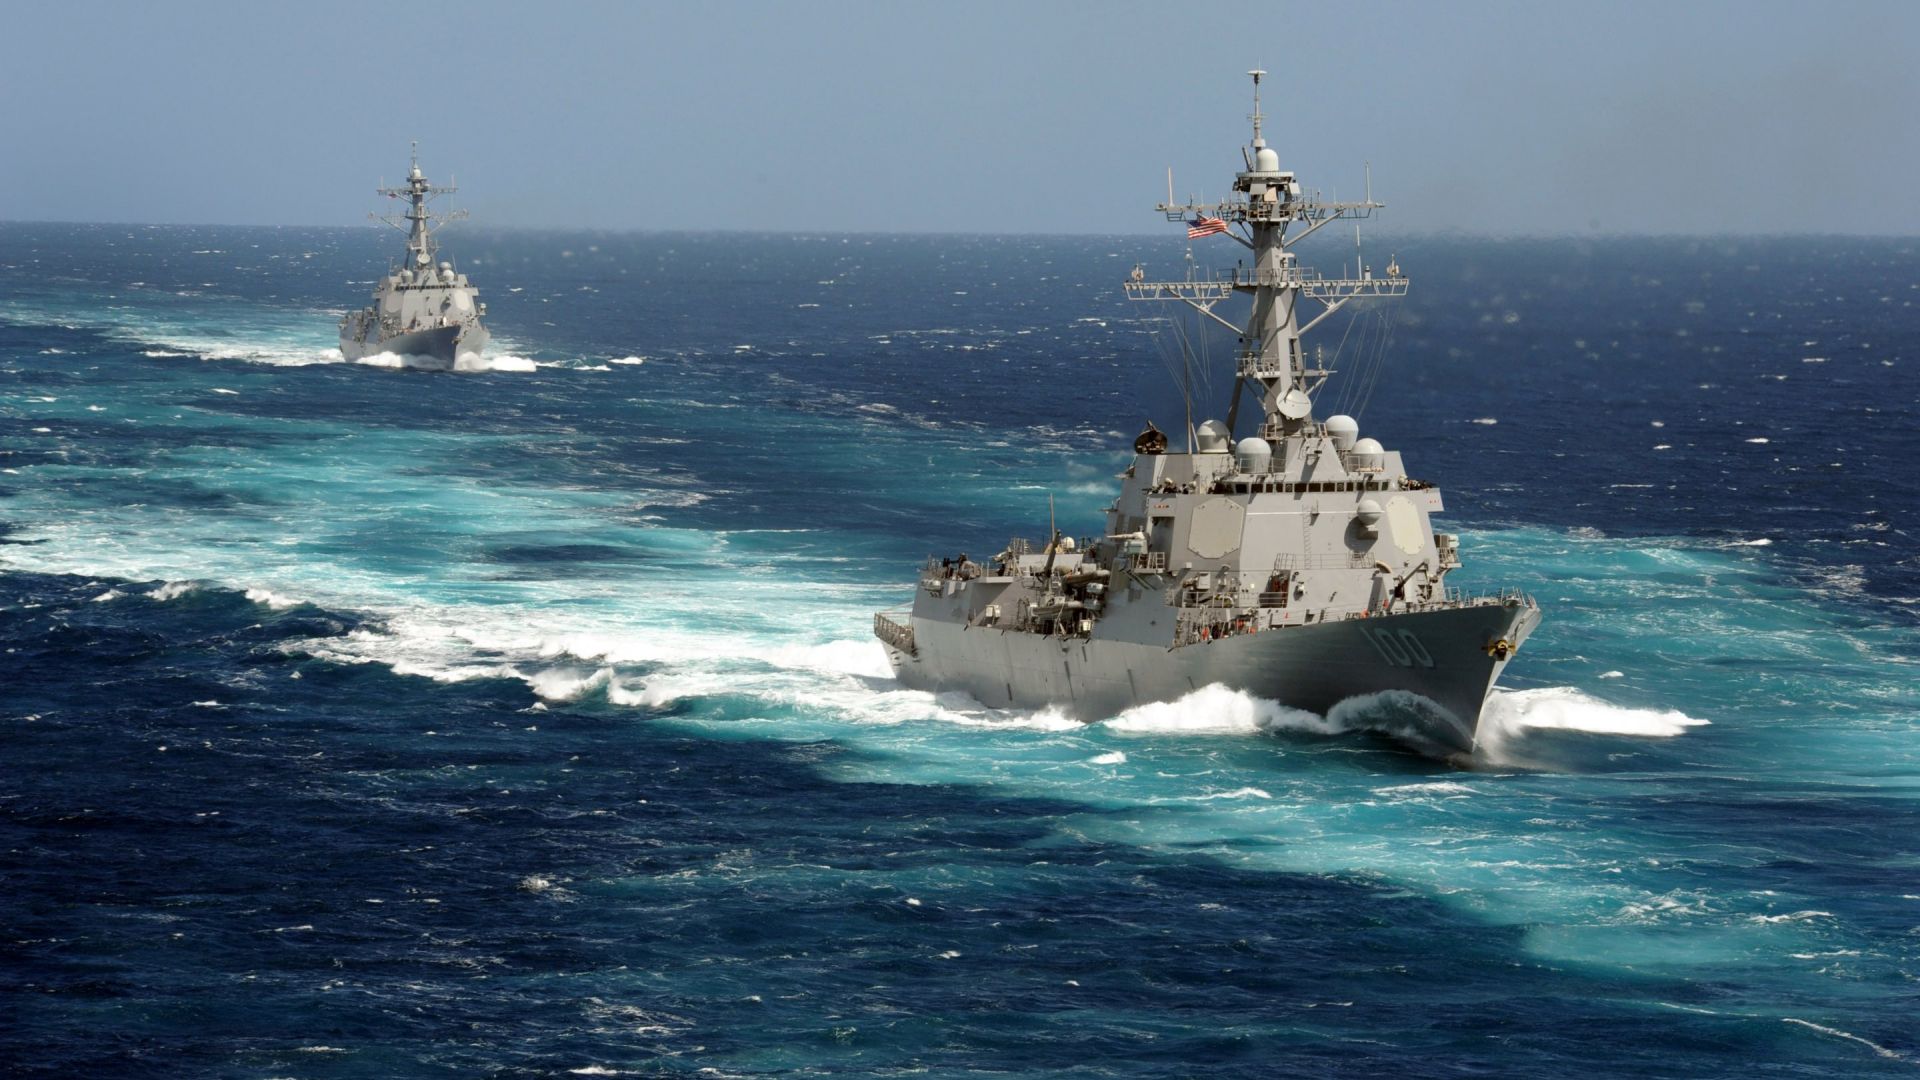 Wallpaper Navy ships of us army